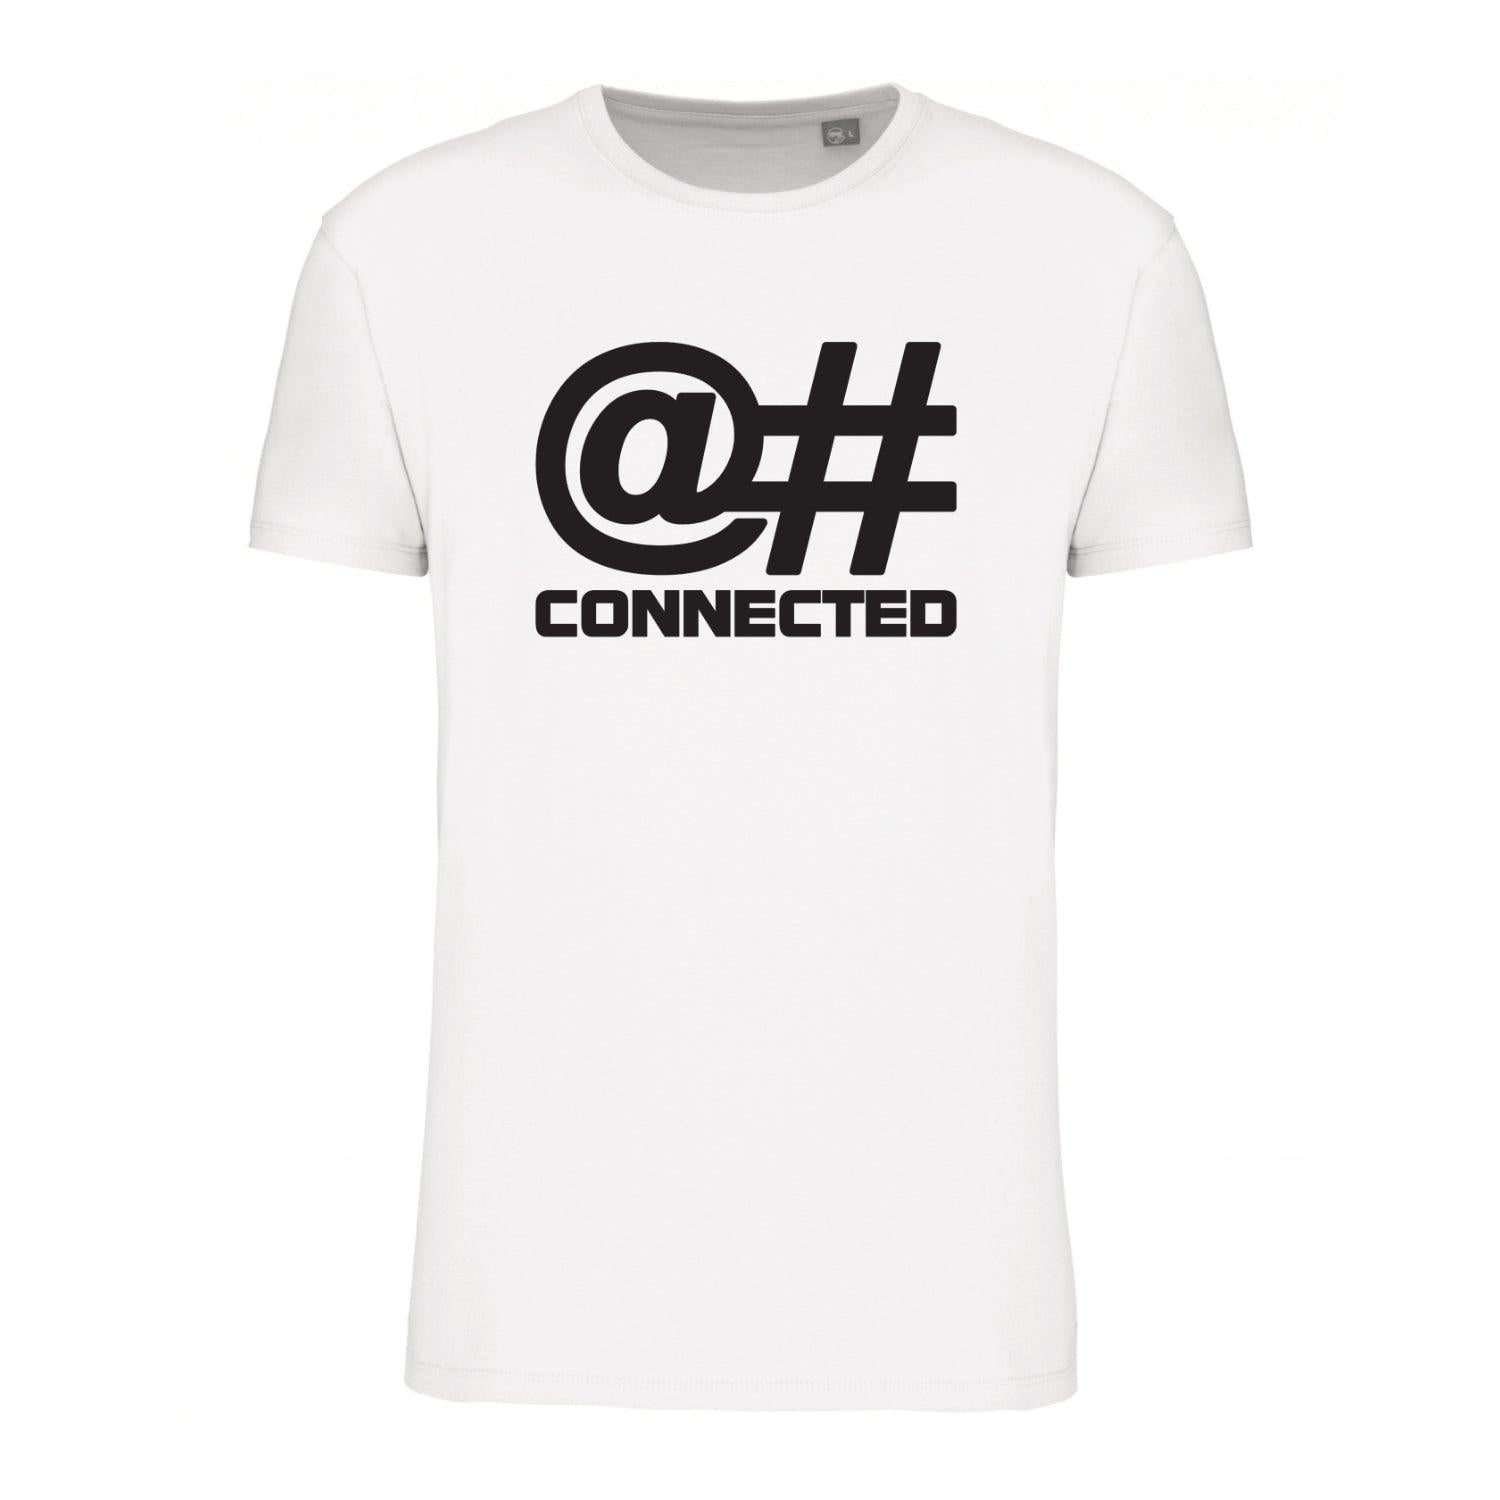 Tee-shirt unisexe blanc CONNECTED 100% coton biologique & vegan - CONNECTED Streetwear